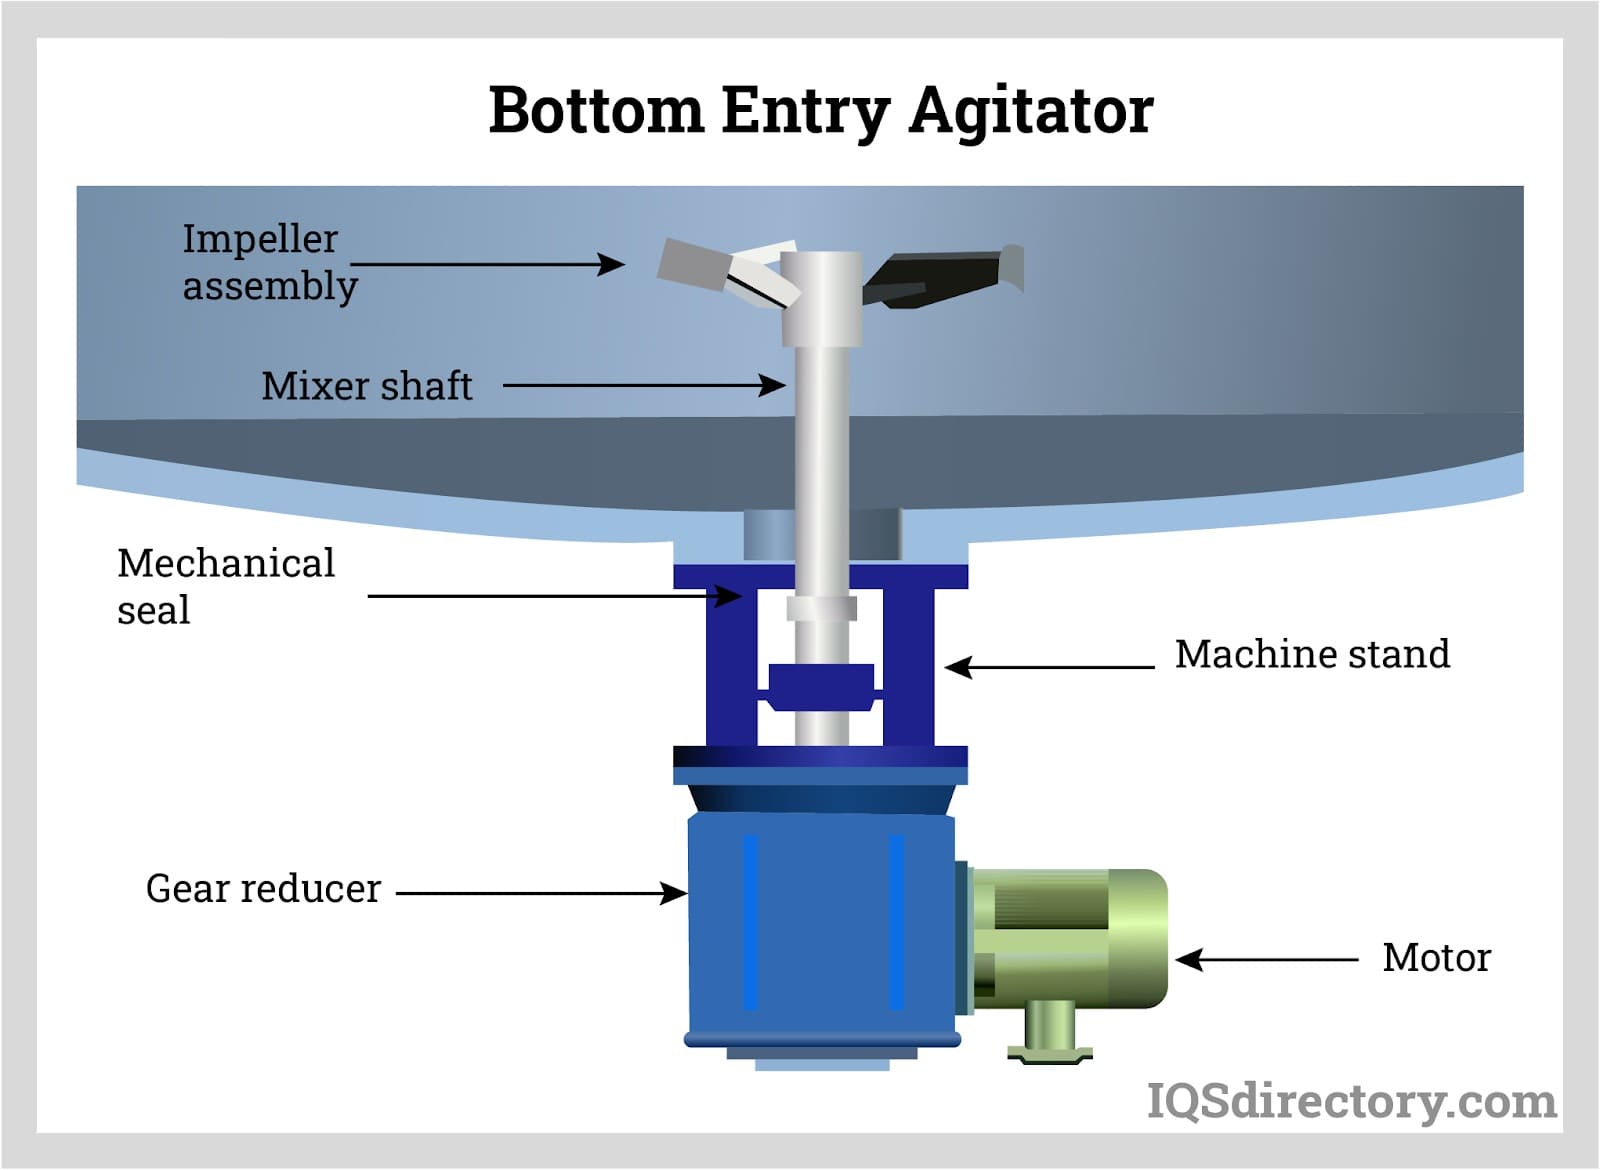 Bottom Entry Agitator